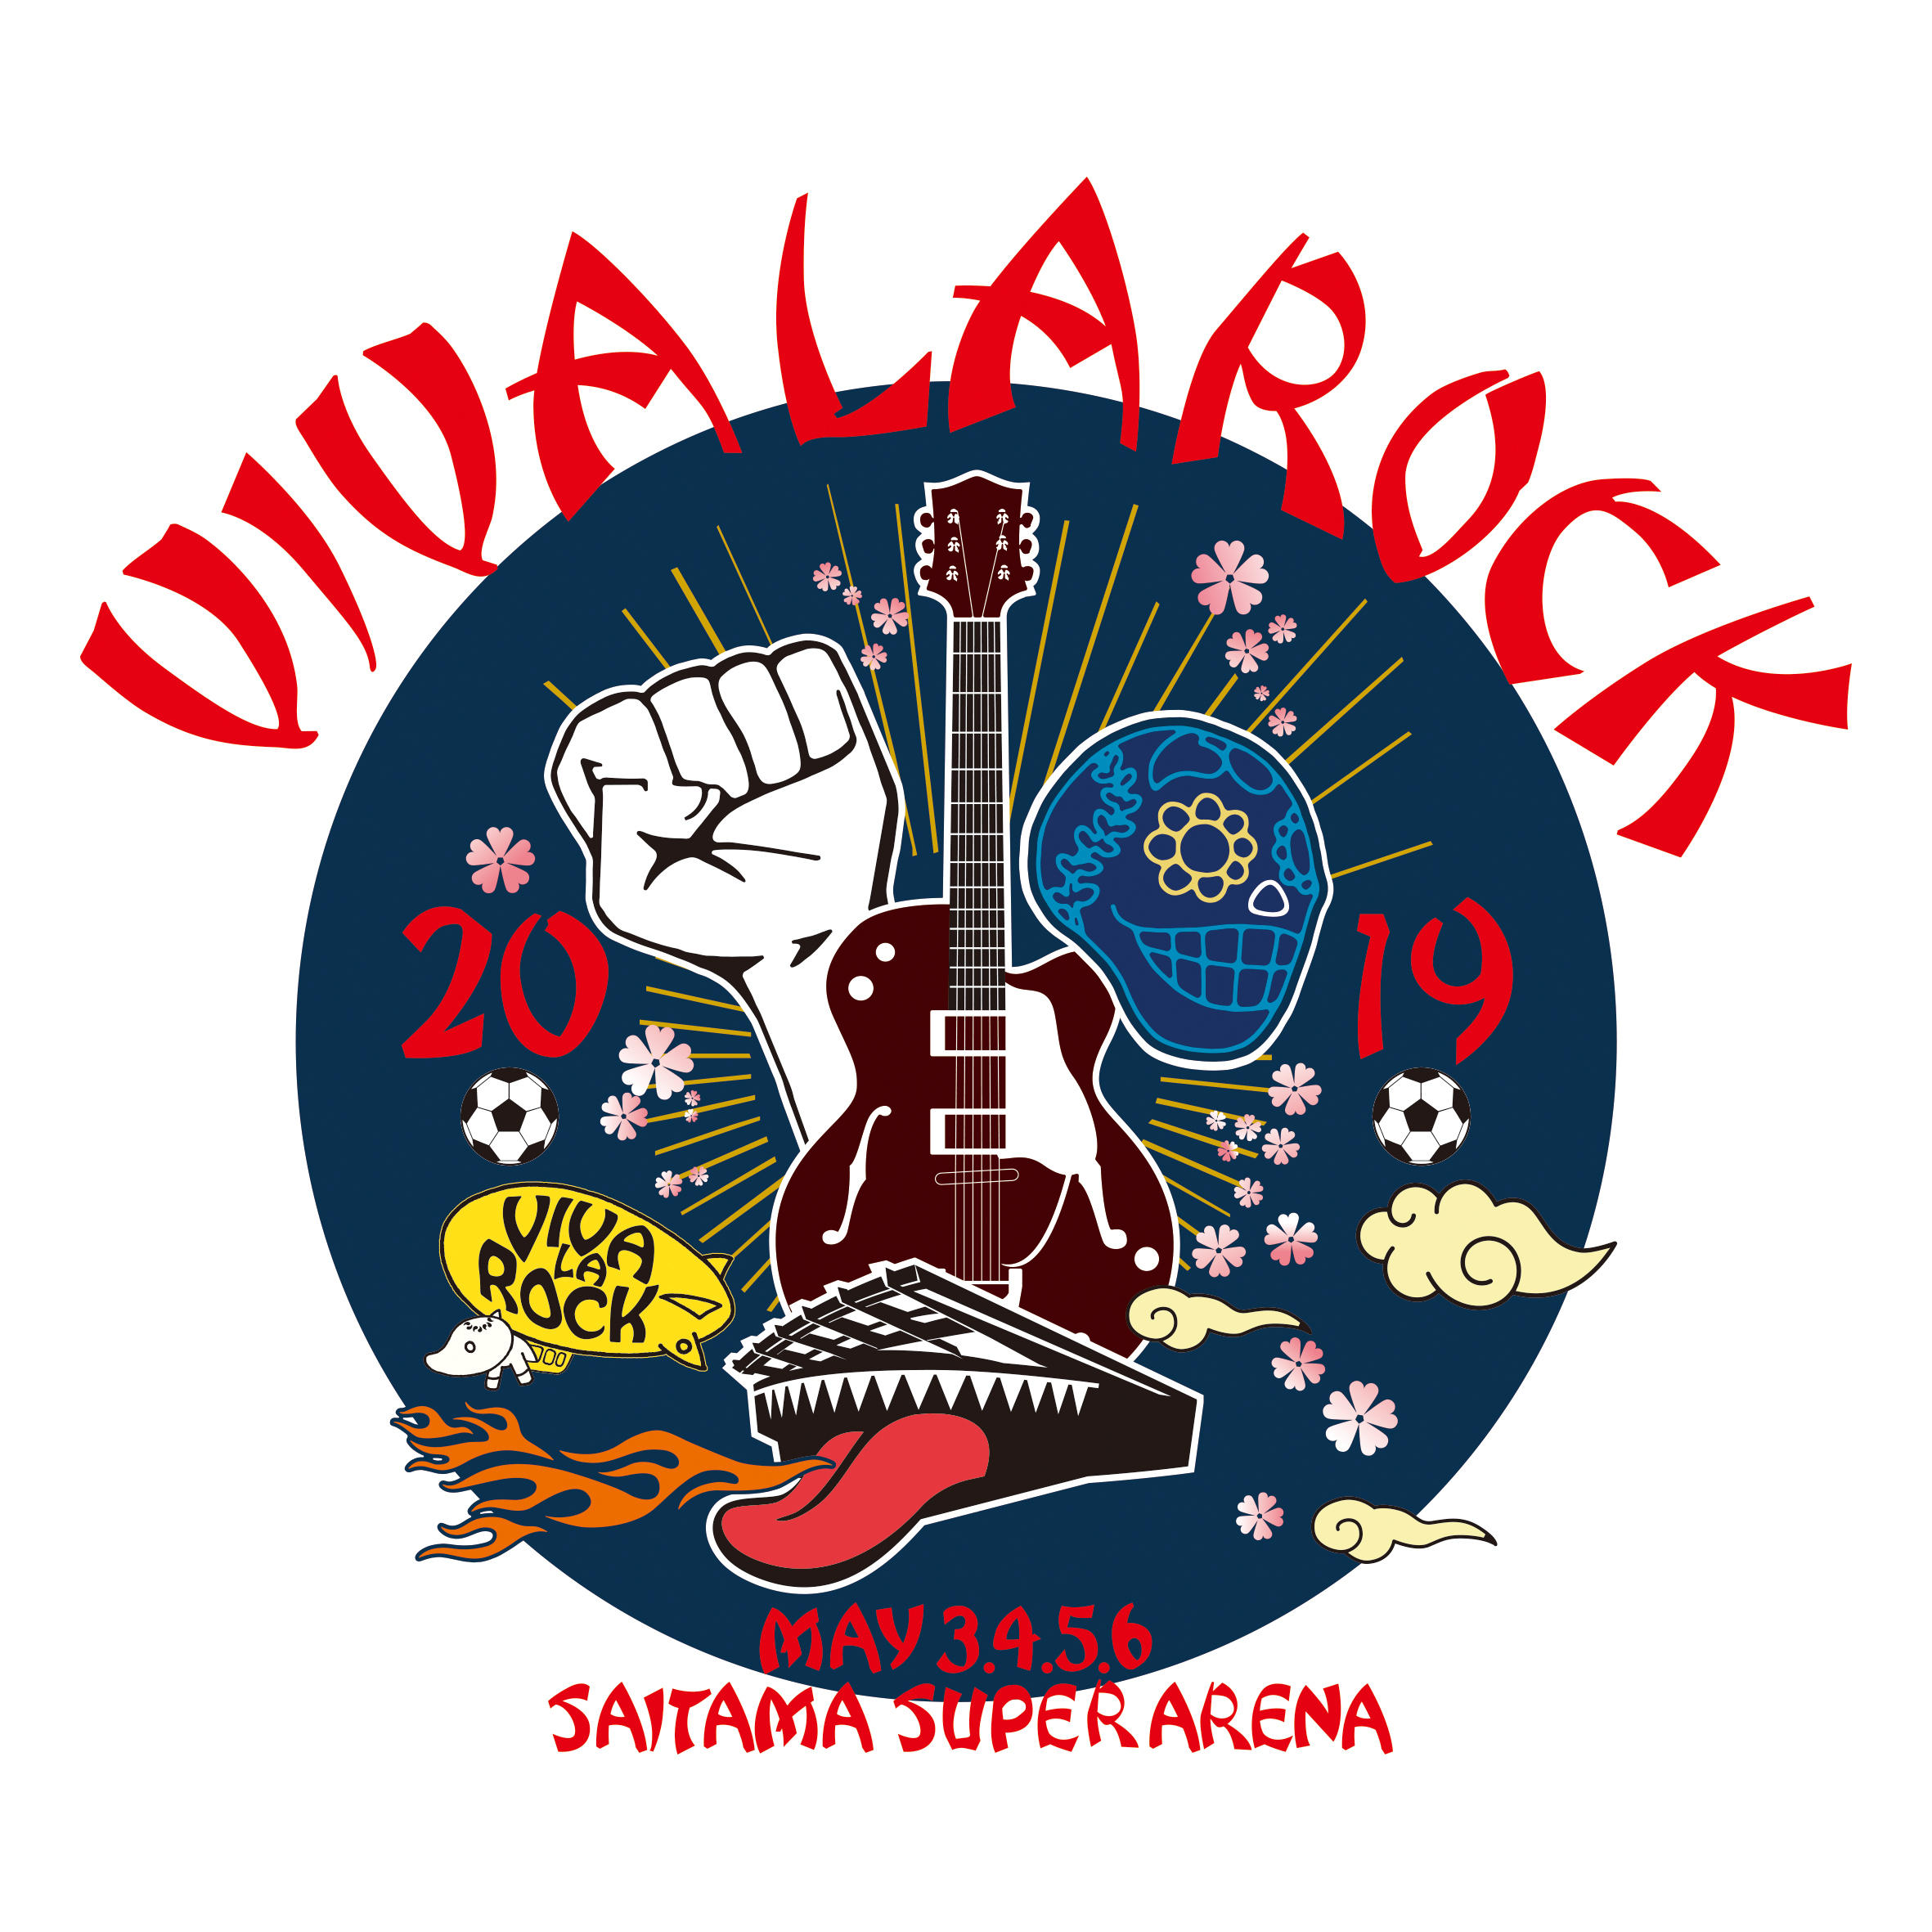 Viva La Rock 19 Uverworld ゲスの極み乙女 Viva La J Rock Anthems ら第4弾出演アーティストを発表 Spice エンタメ特化型情報メディア スパイス